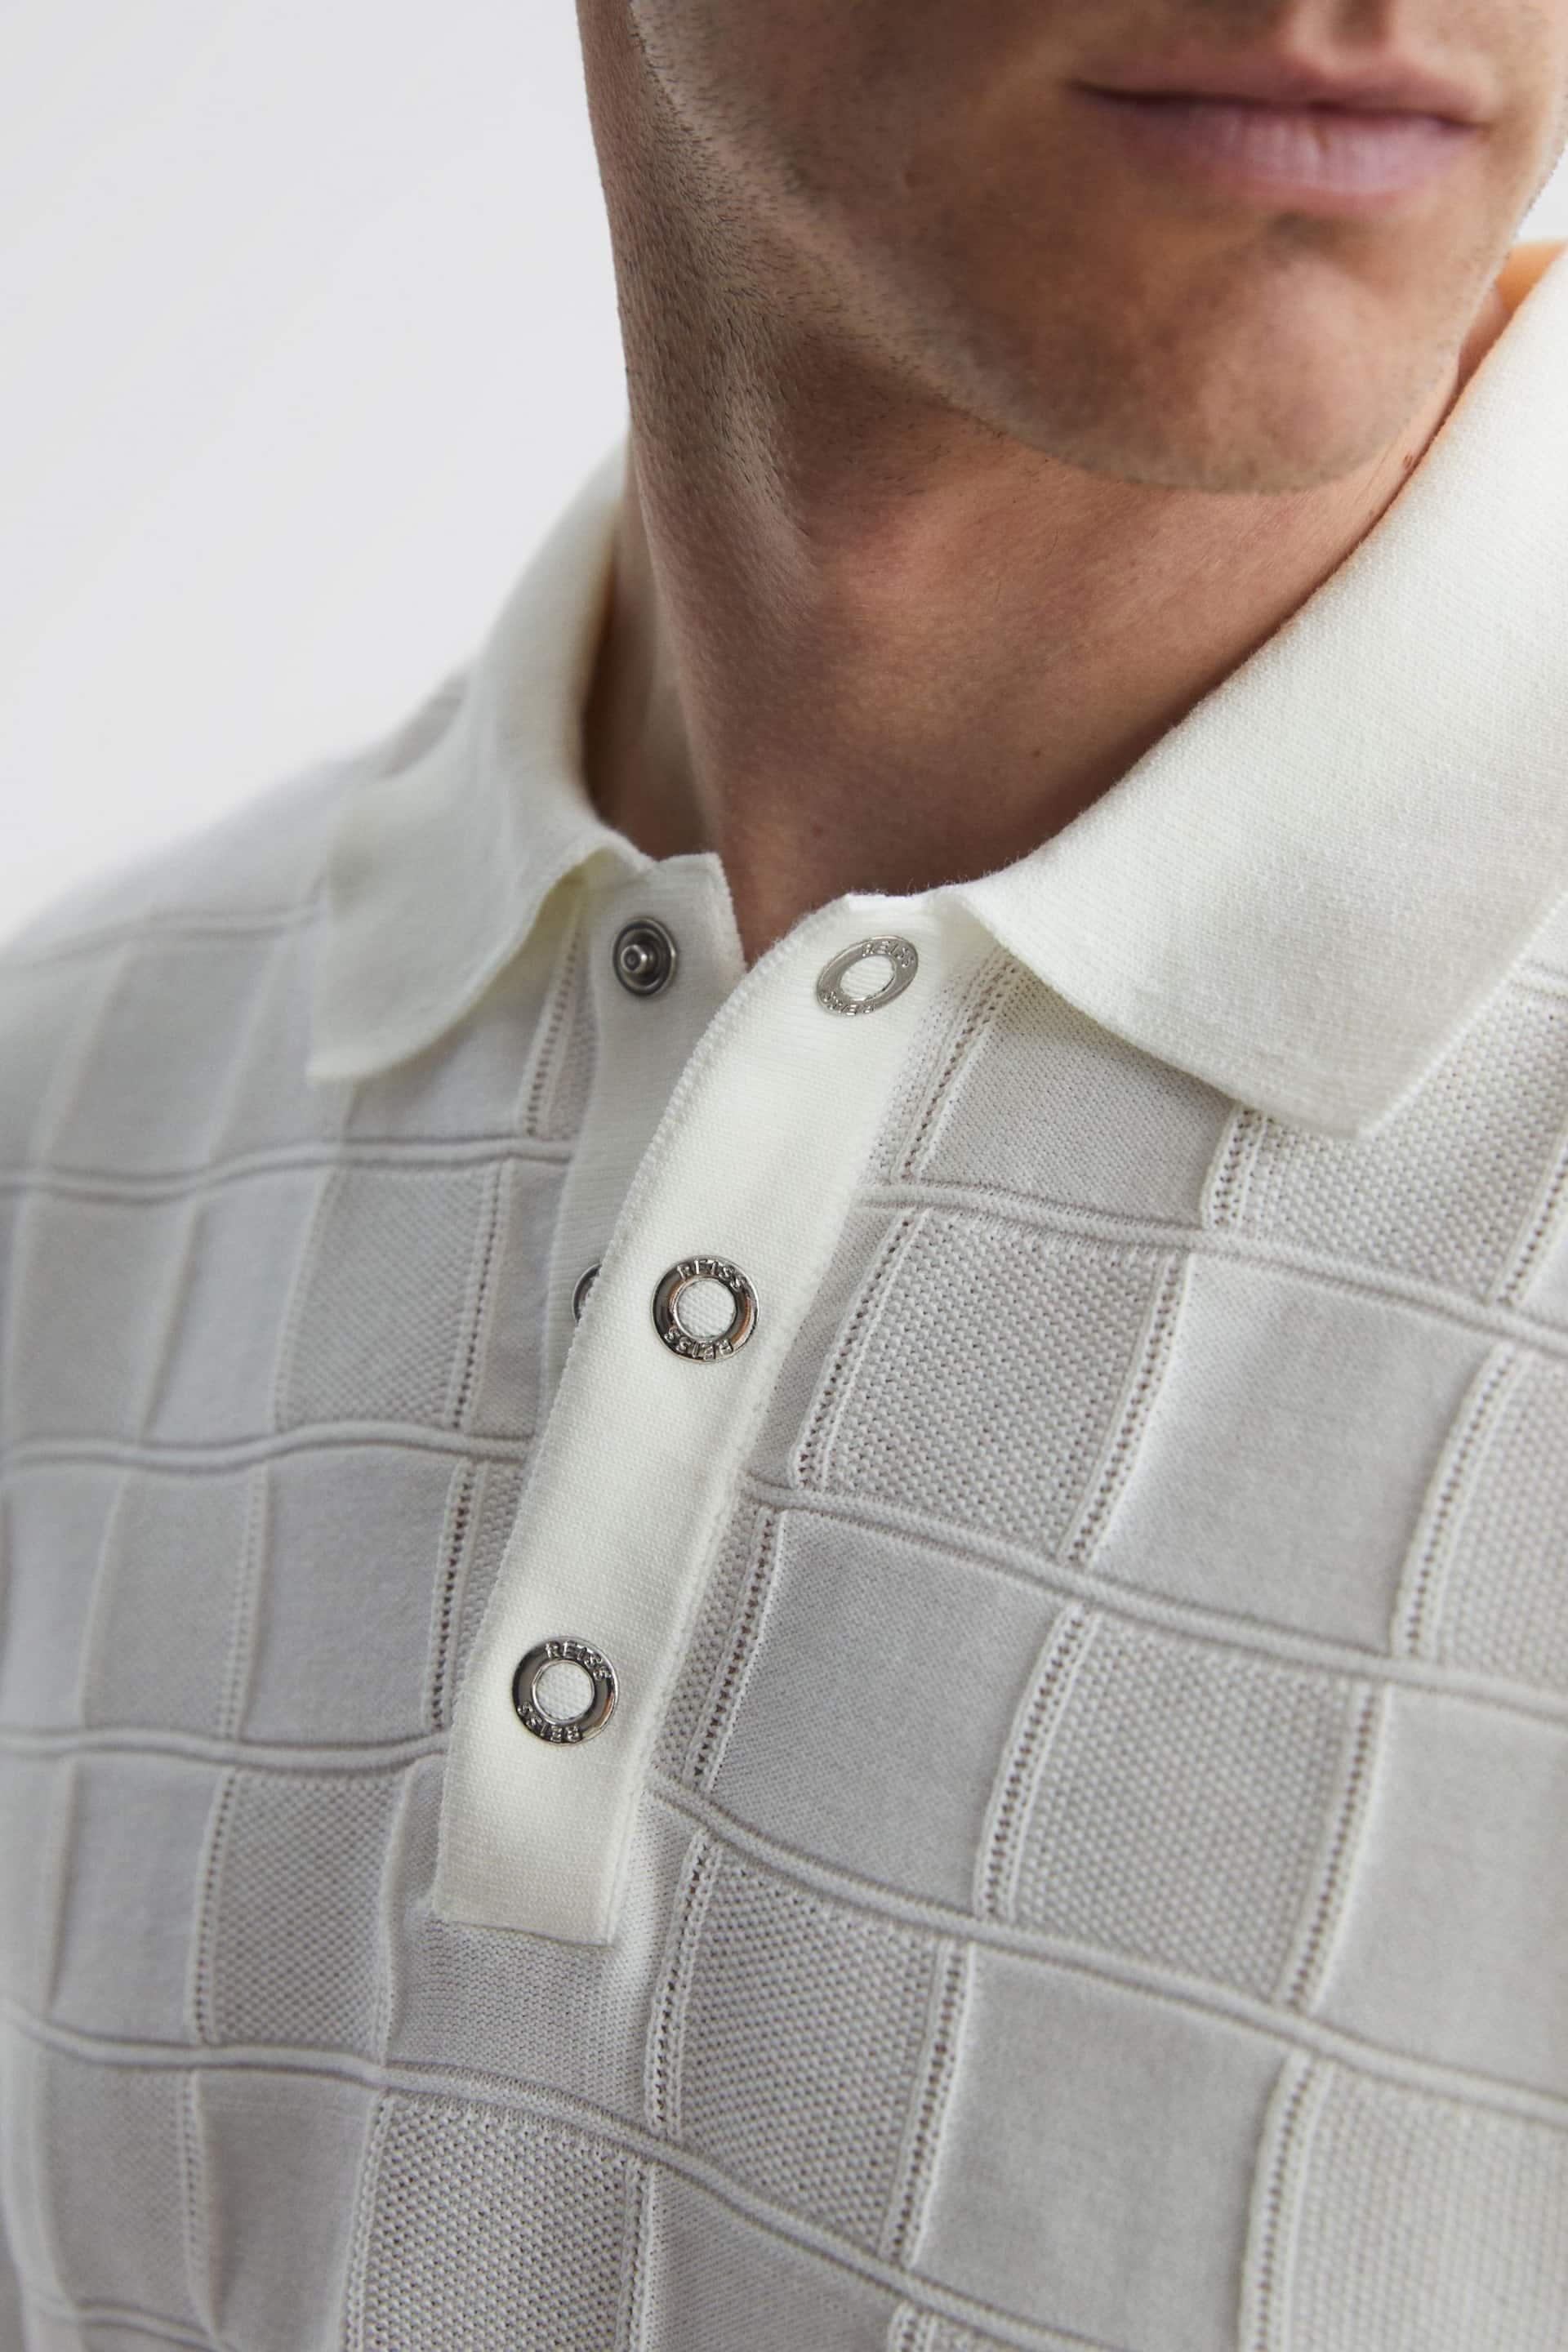 Reiss White Blaze Cotton Press-Stud Polo T-Shirt - Image 3 of 4